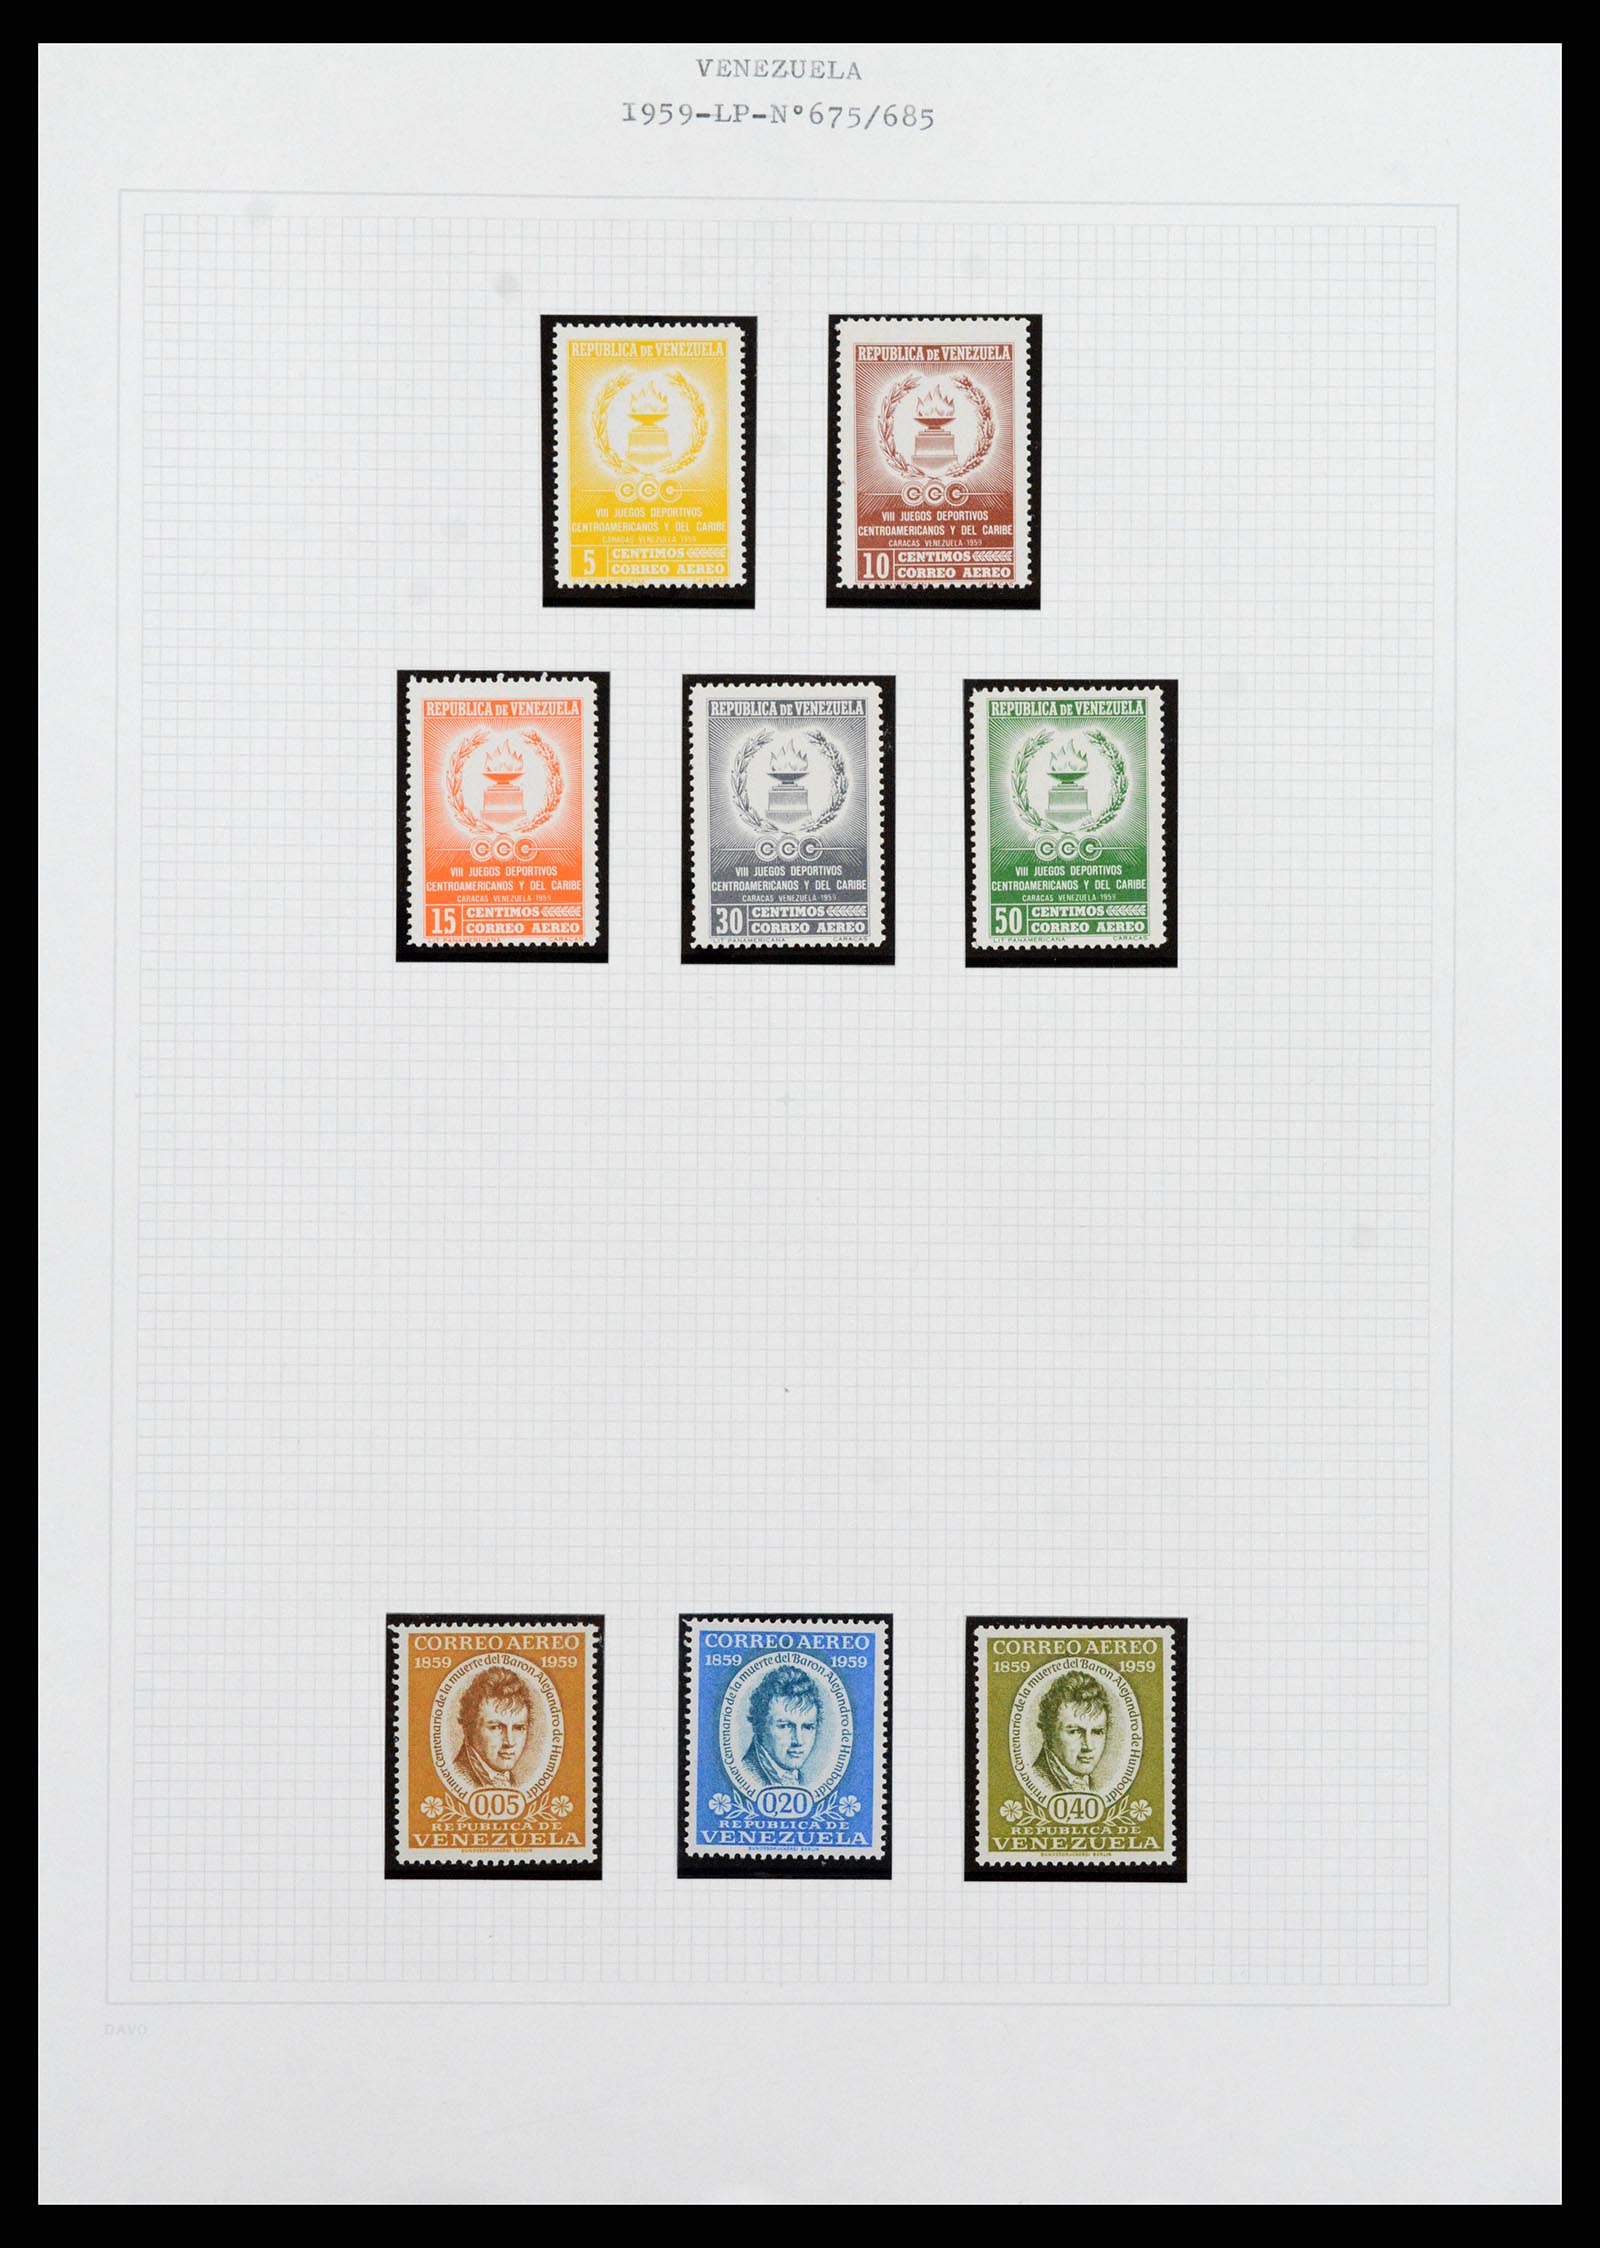 37353 096 - Stamp collection 37353 Venezuela 1880-1960.